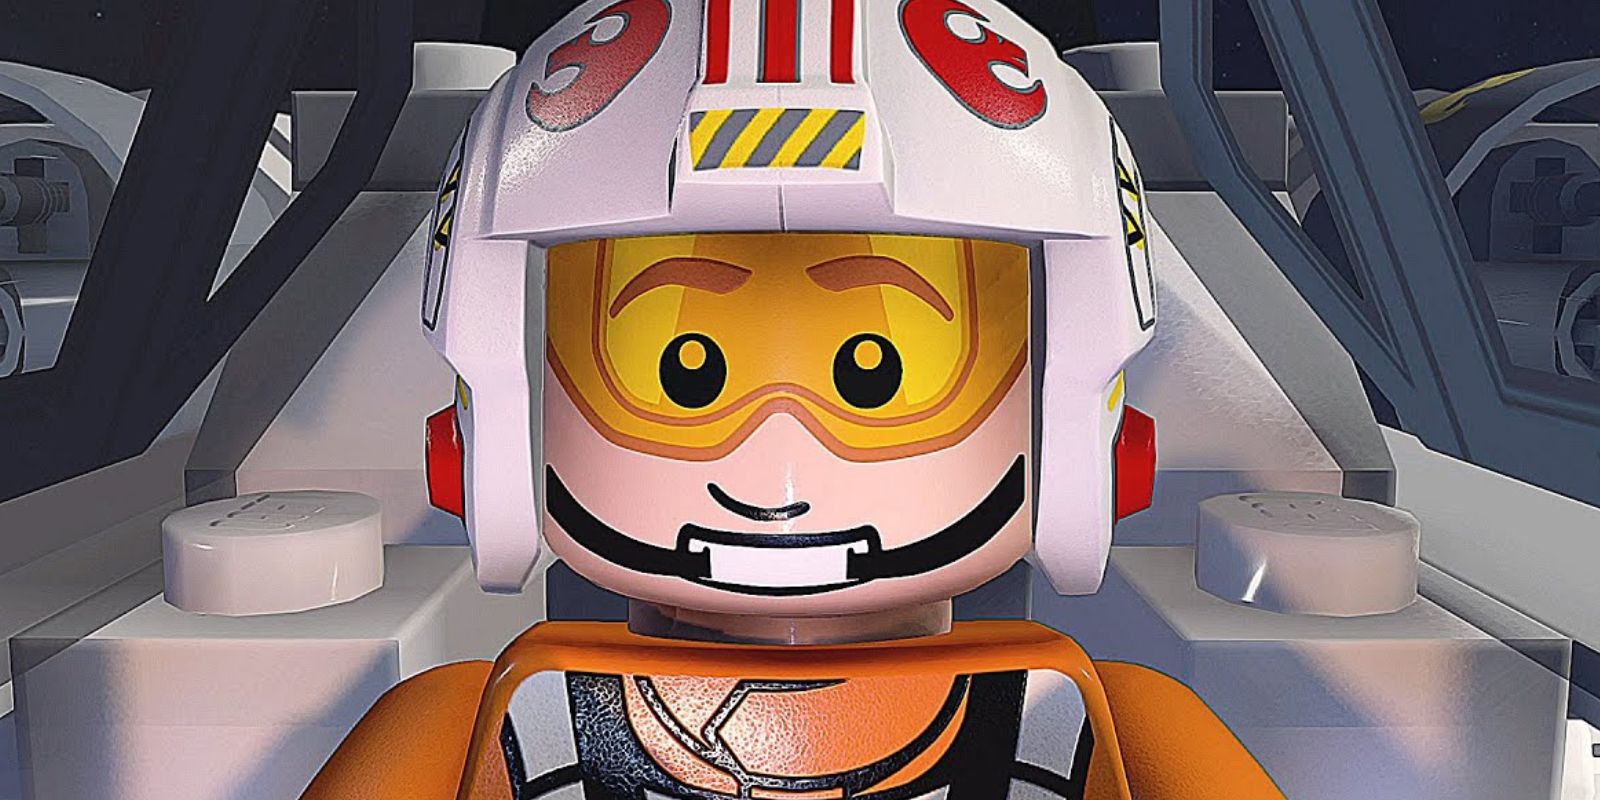 A LEGO minifigure of Star Wars' Luke Skywalker in his Rebel Pilot outfit.